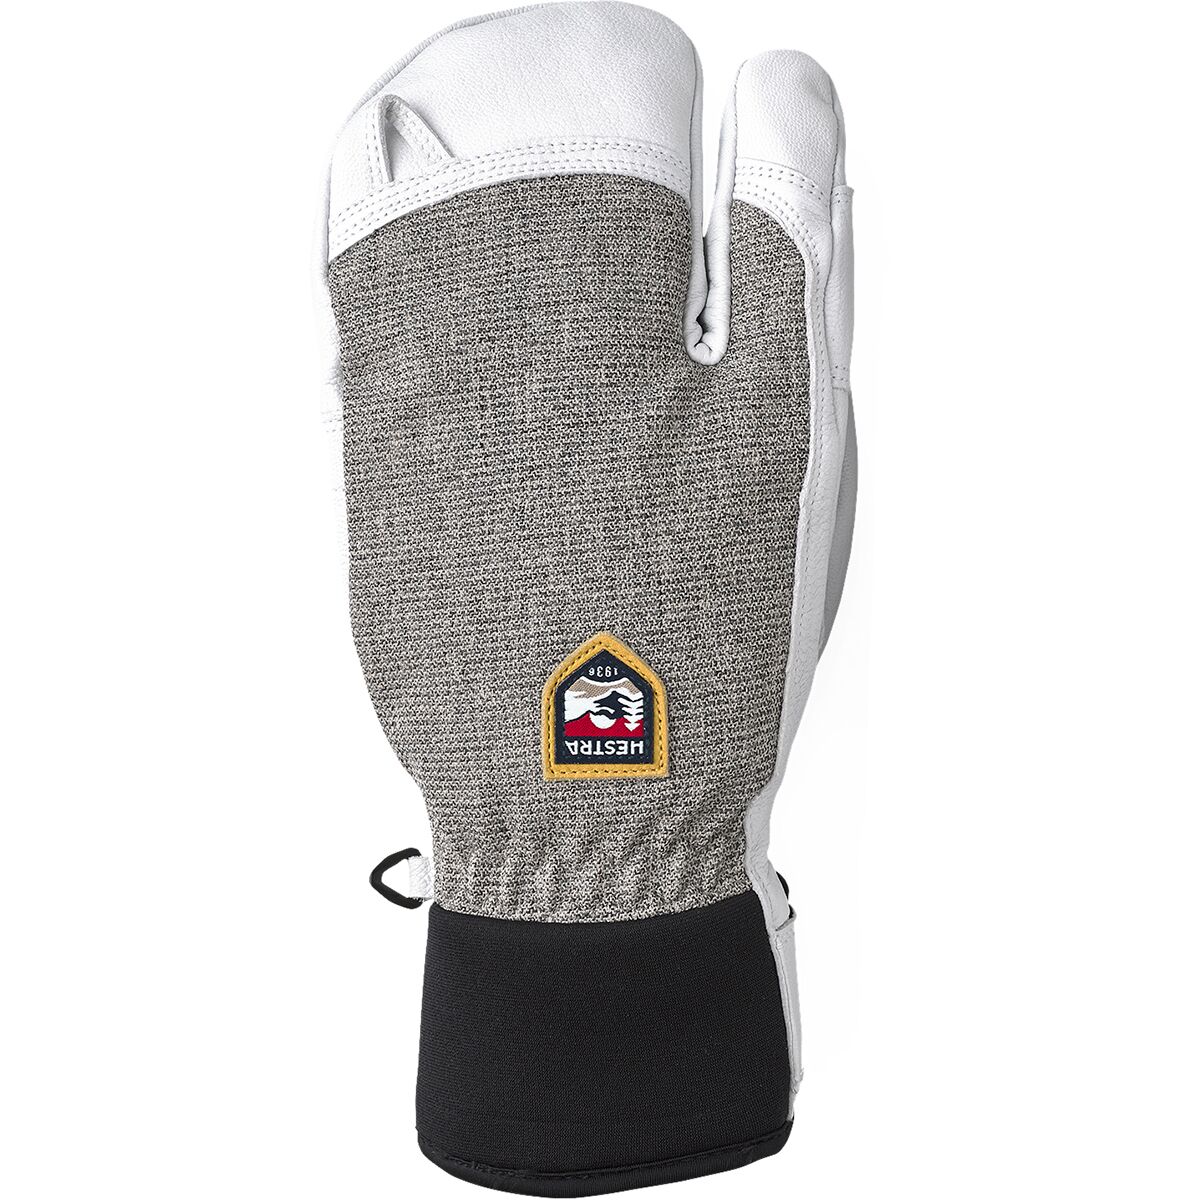 Hestra Army Leather Patrol 3-Finger Glove - Men's Light Grey